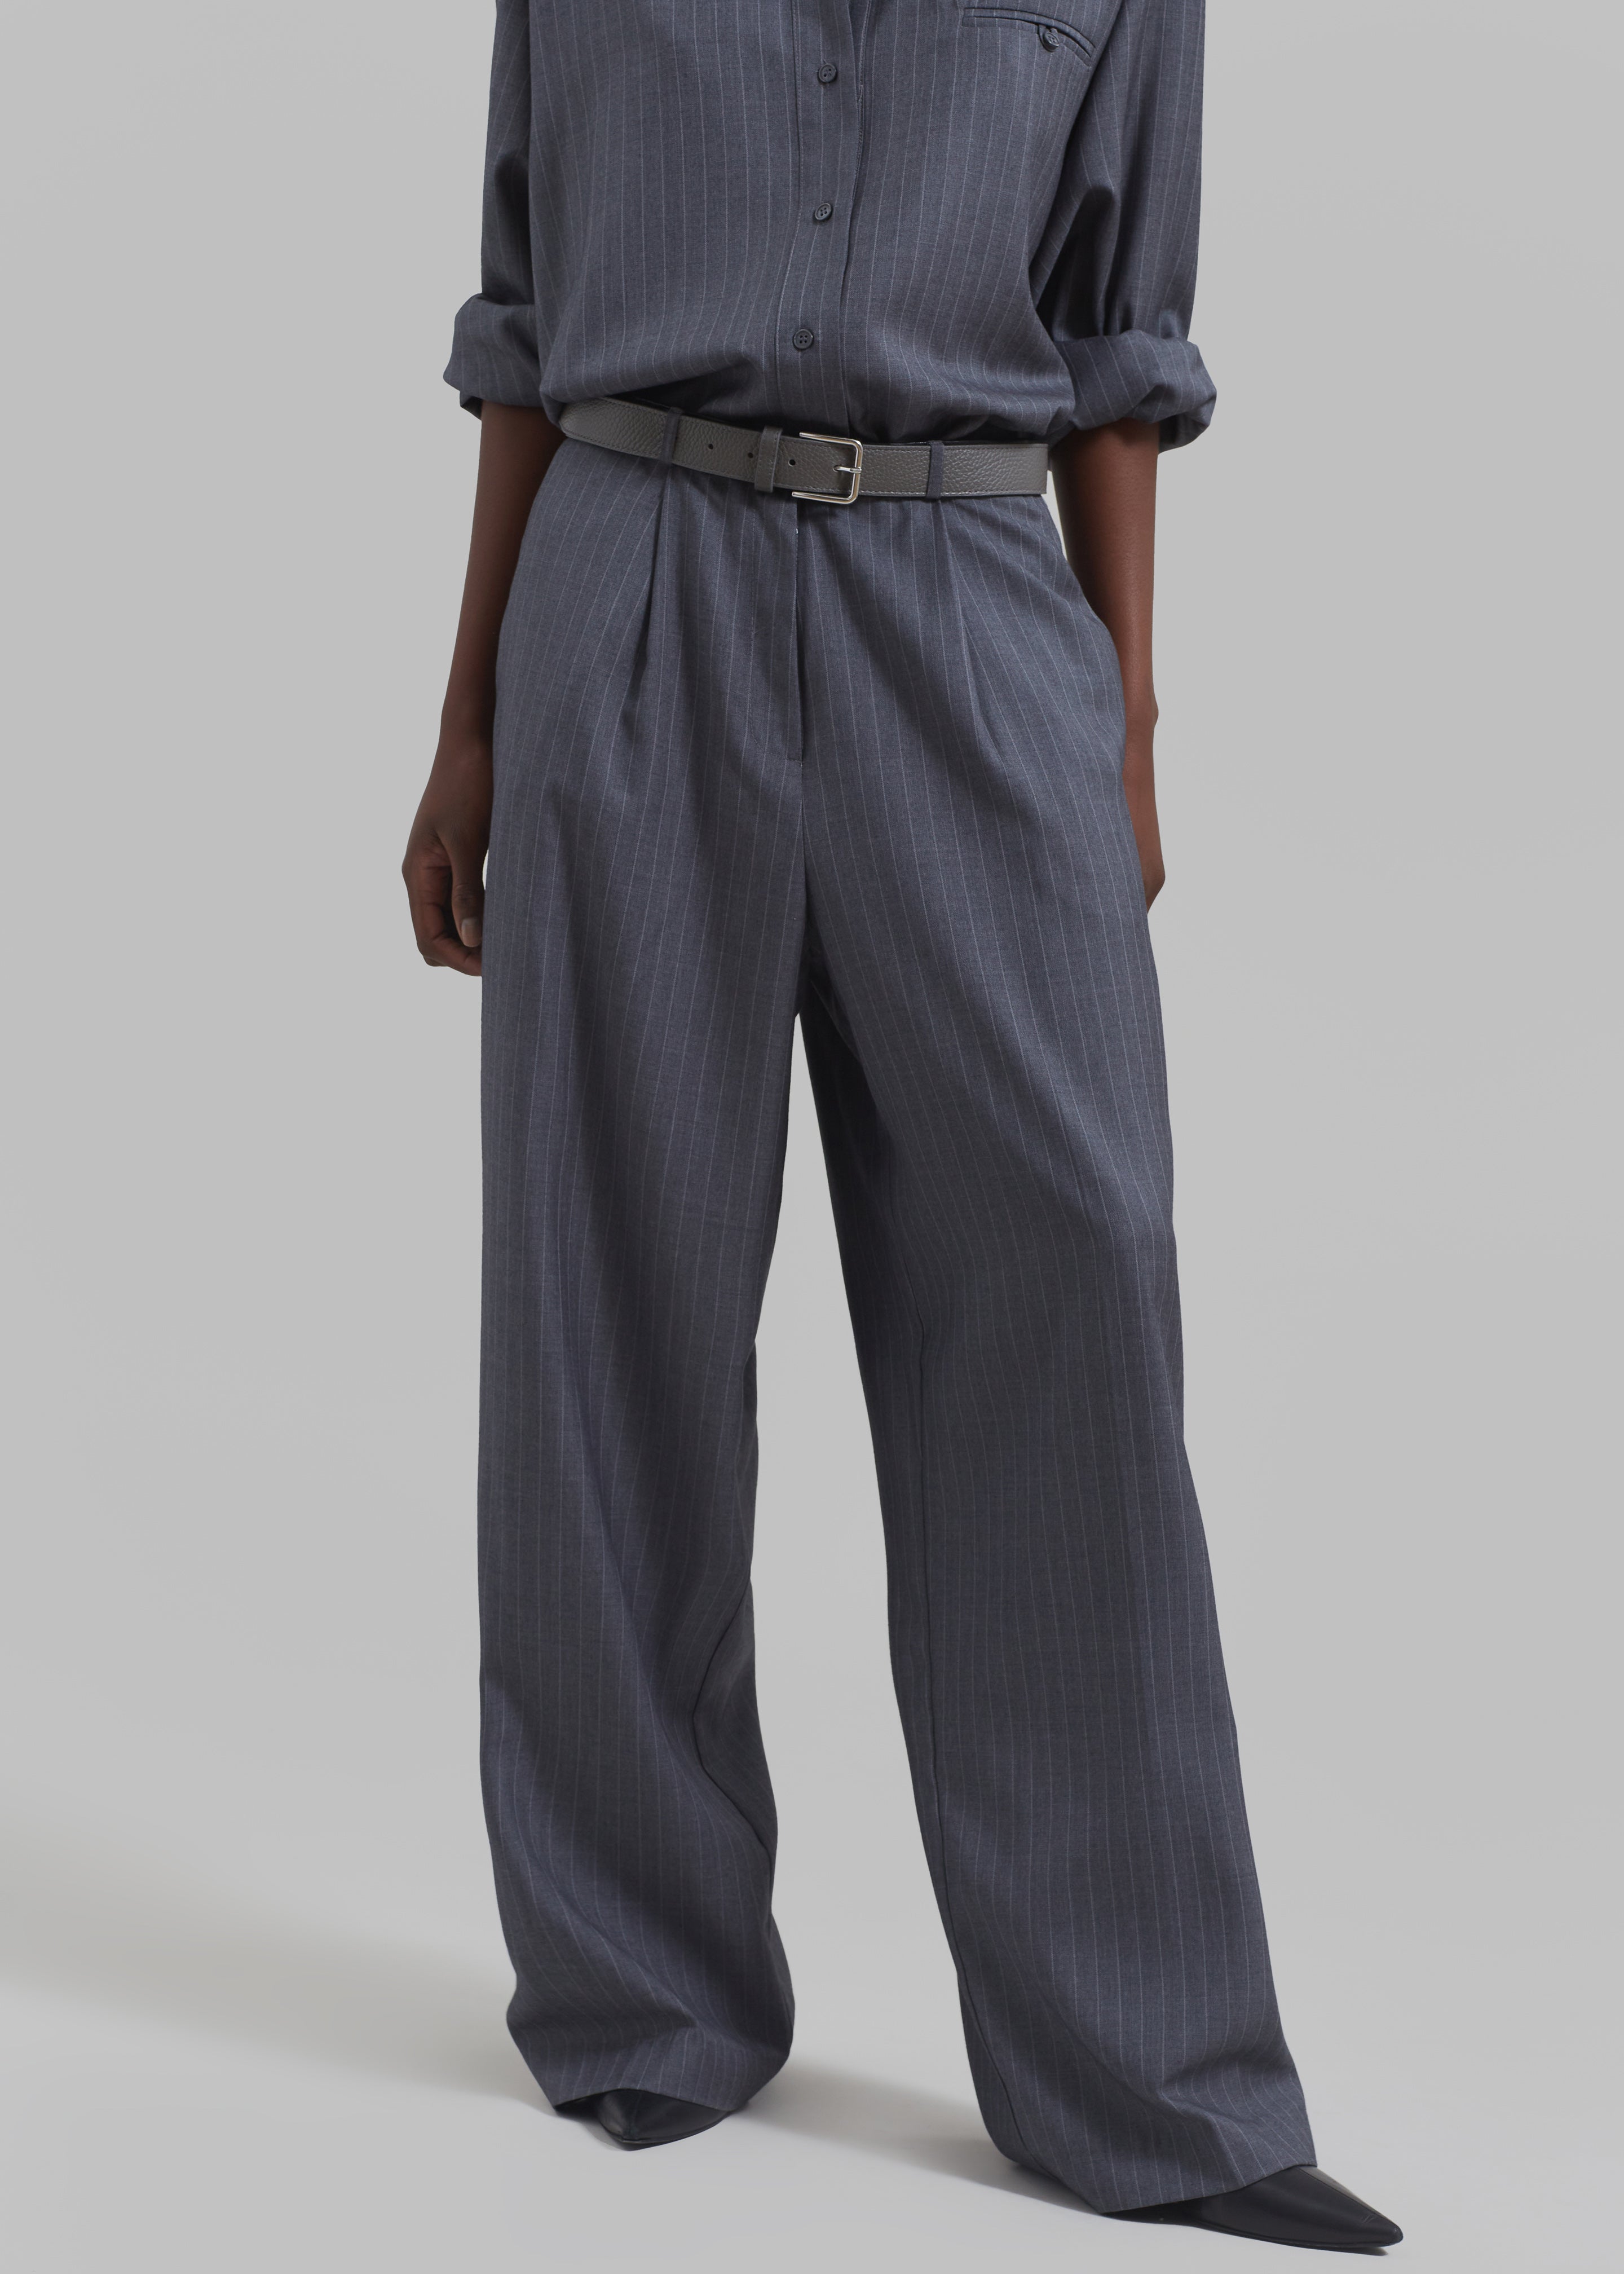 Kerry Trousers - Grey Pinstripe - 2